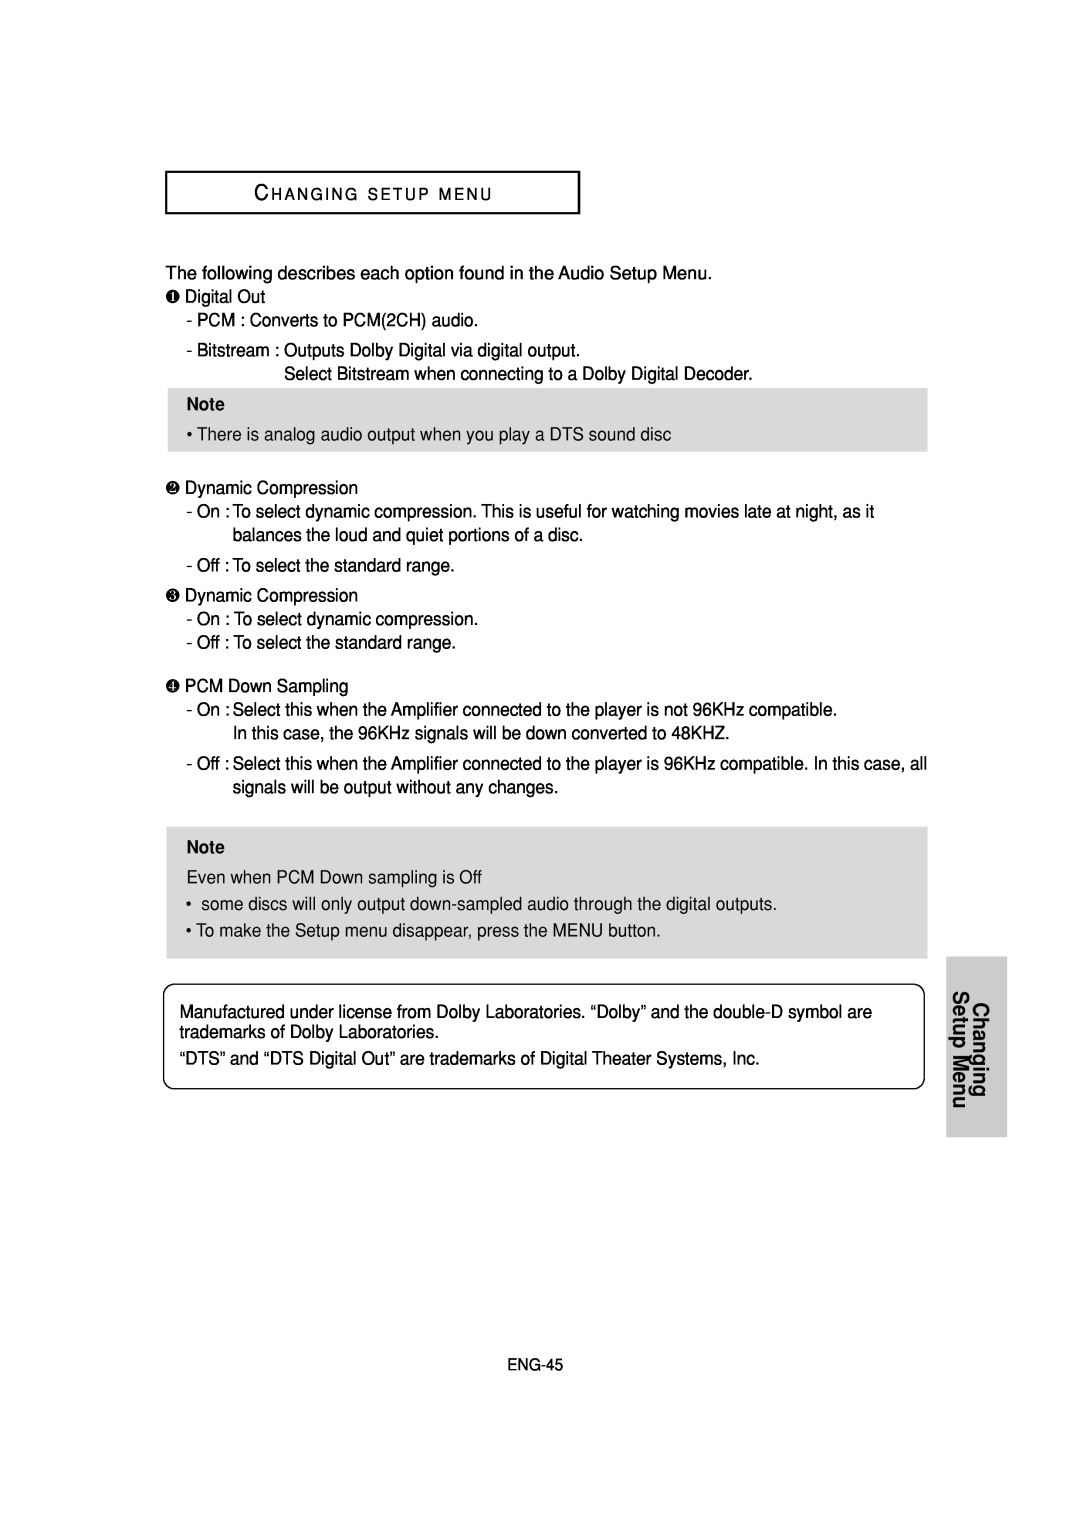 Samsung DVD-P181 manual Changing Setup Menu, The following describes each option found in the Audio Setup Menu 